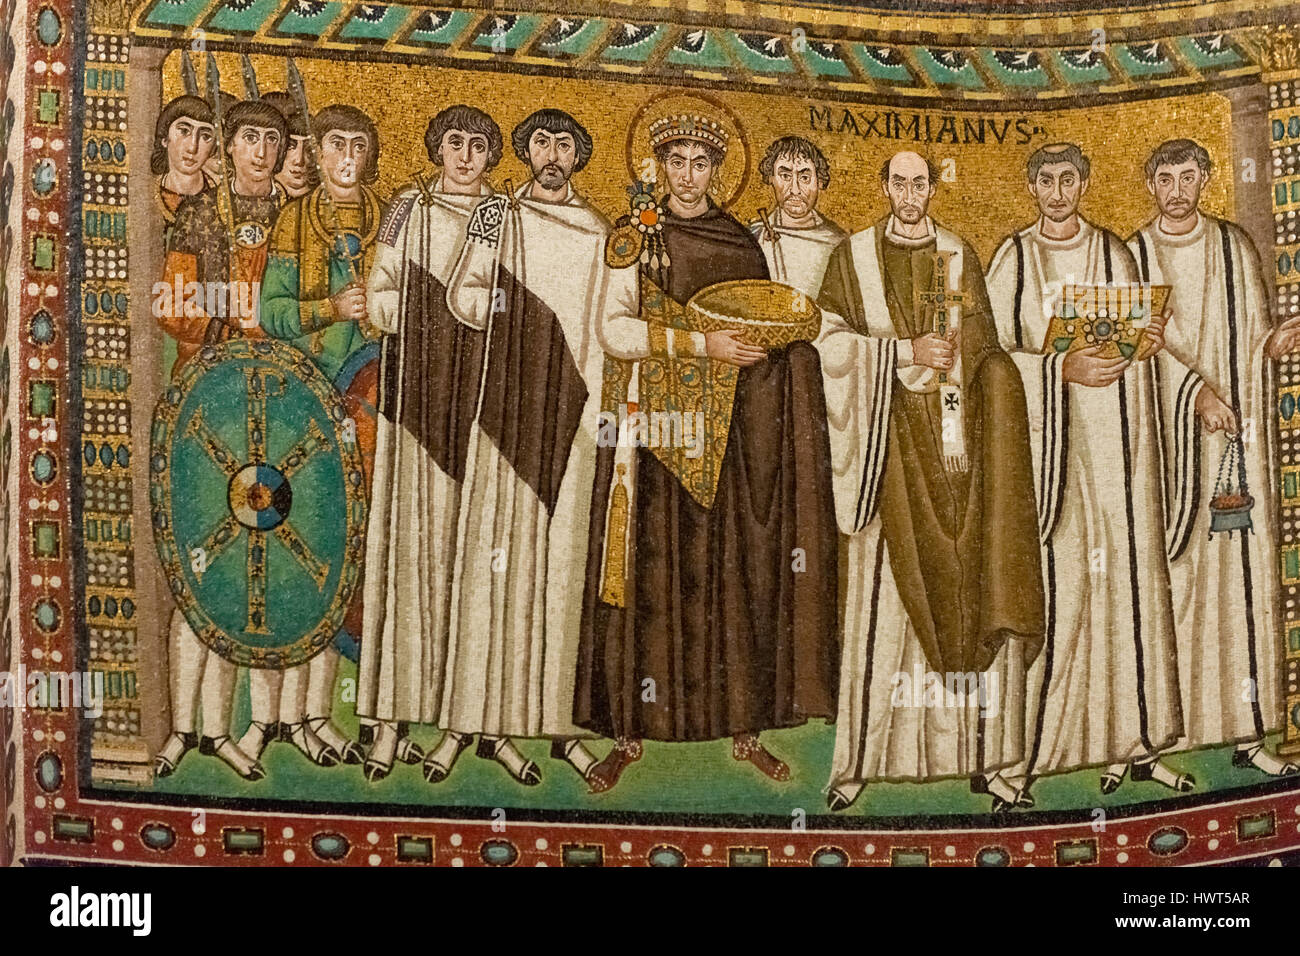 Byzantine mosaic in the basilica of San Vitale, Ravenna, Italy Stock Photo